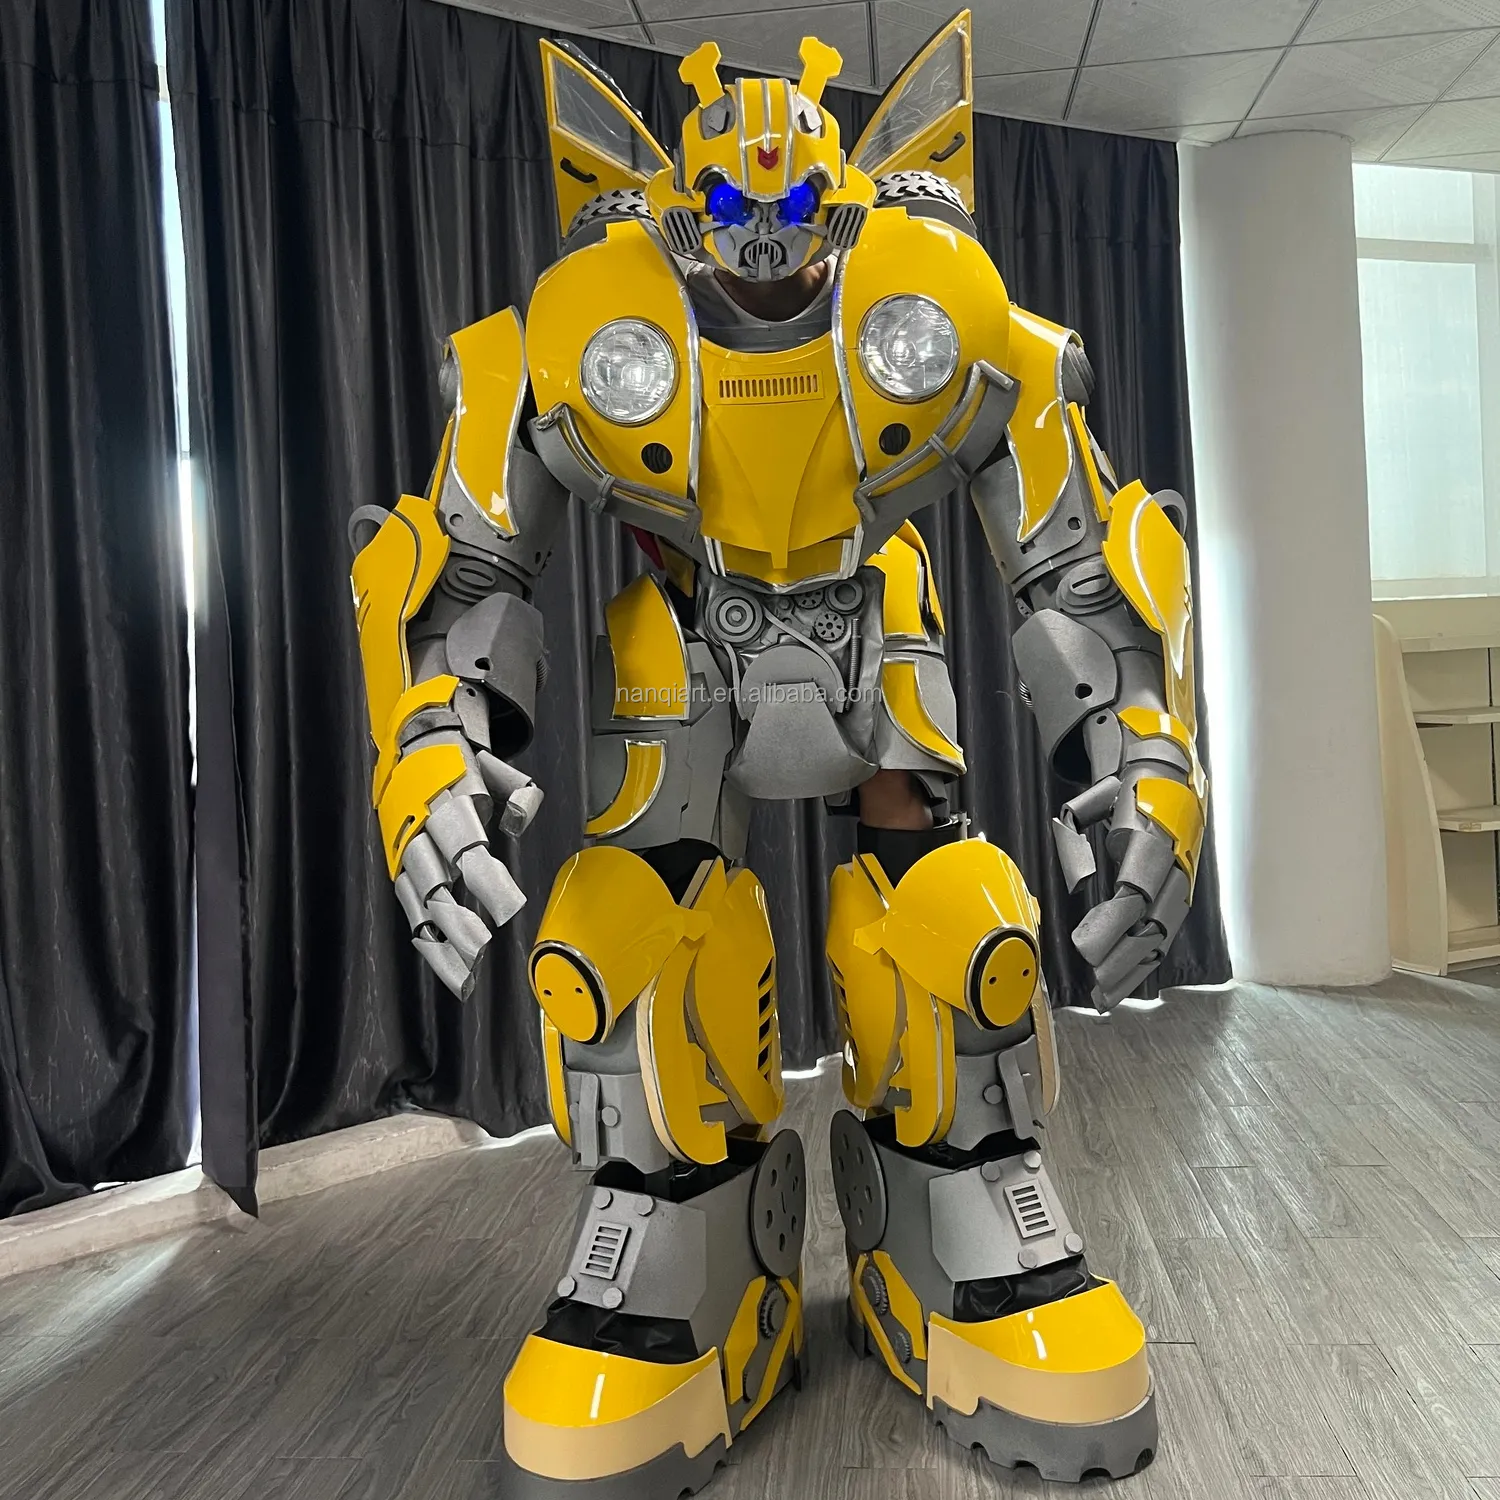 Costume De Robot De grande taille, vente en gros d'usine, Performance d'halloween, 9 pieds De haut, Costume De Cosplay, mascotte De Robot Les, Costumes